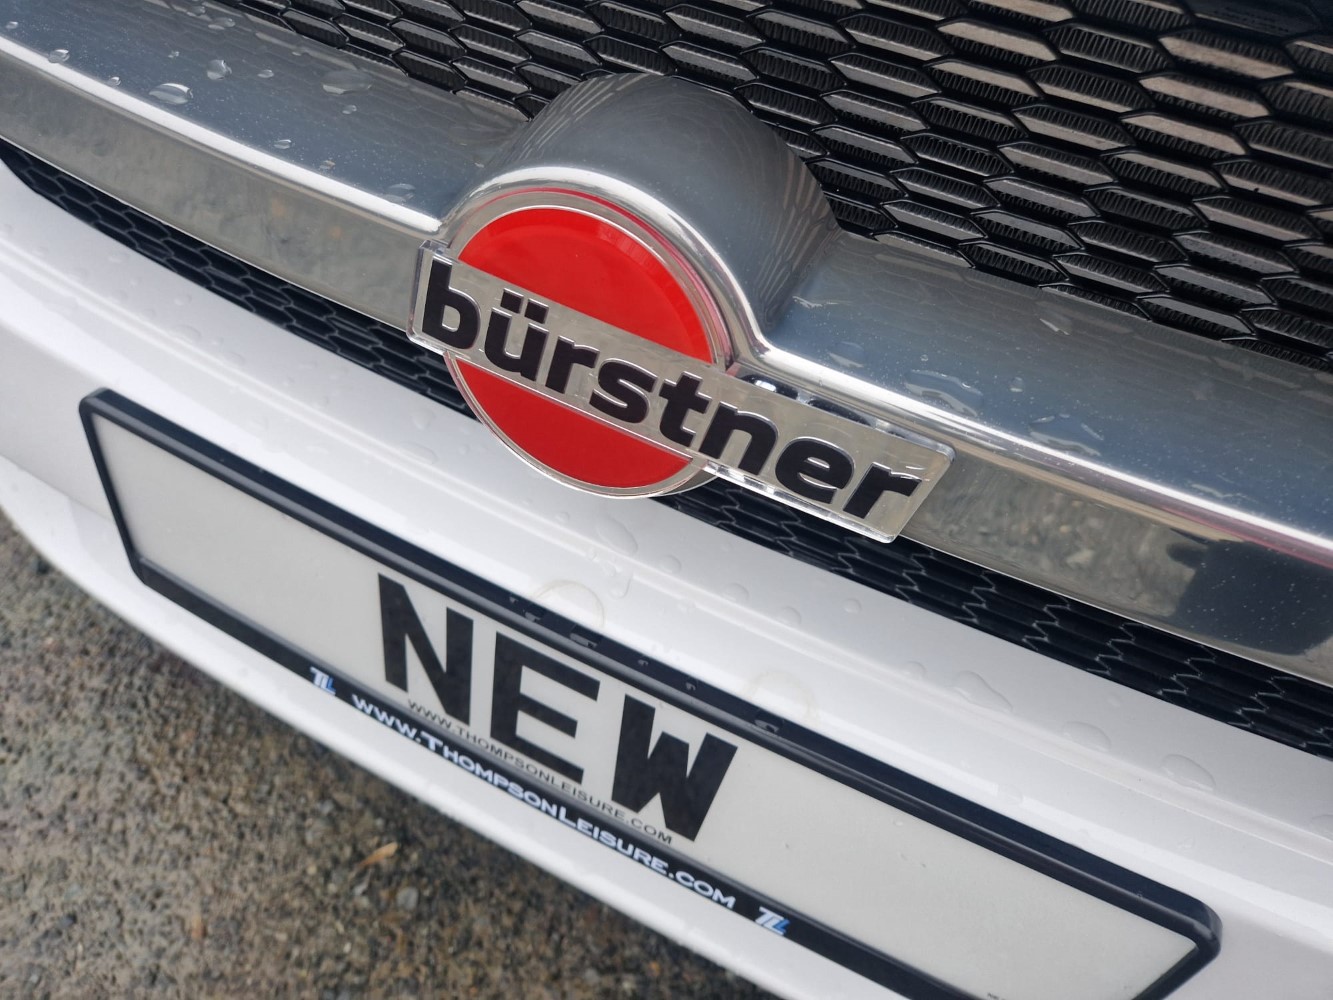 NEW Burstner Lyseo I 744 - Automatic